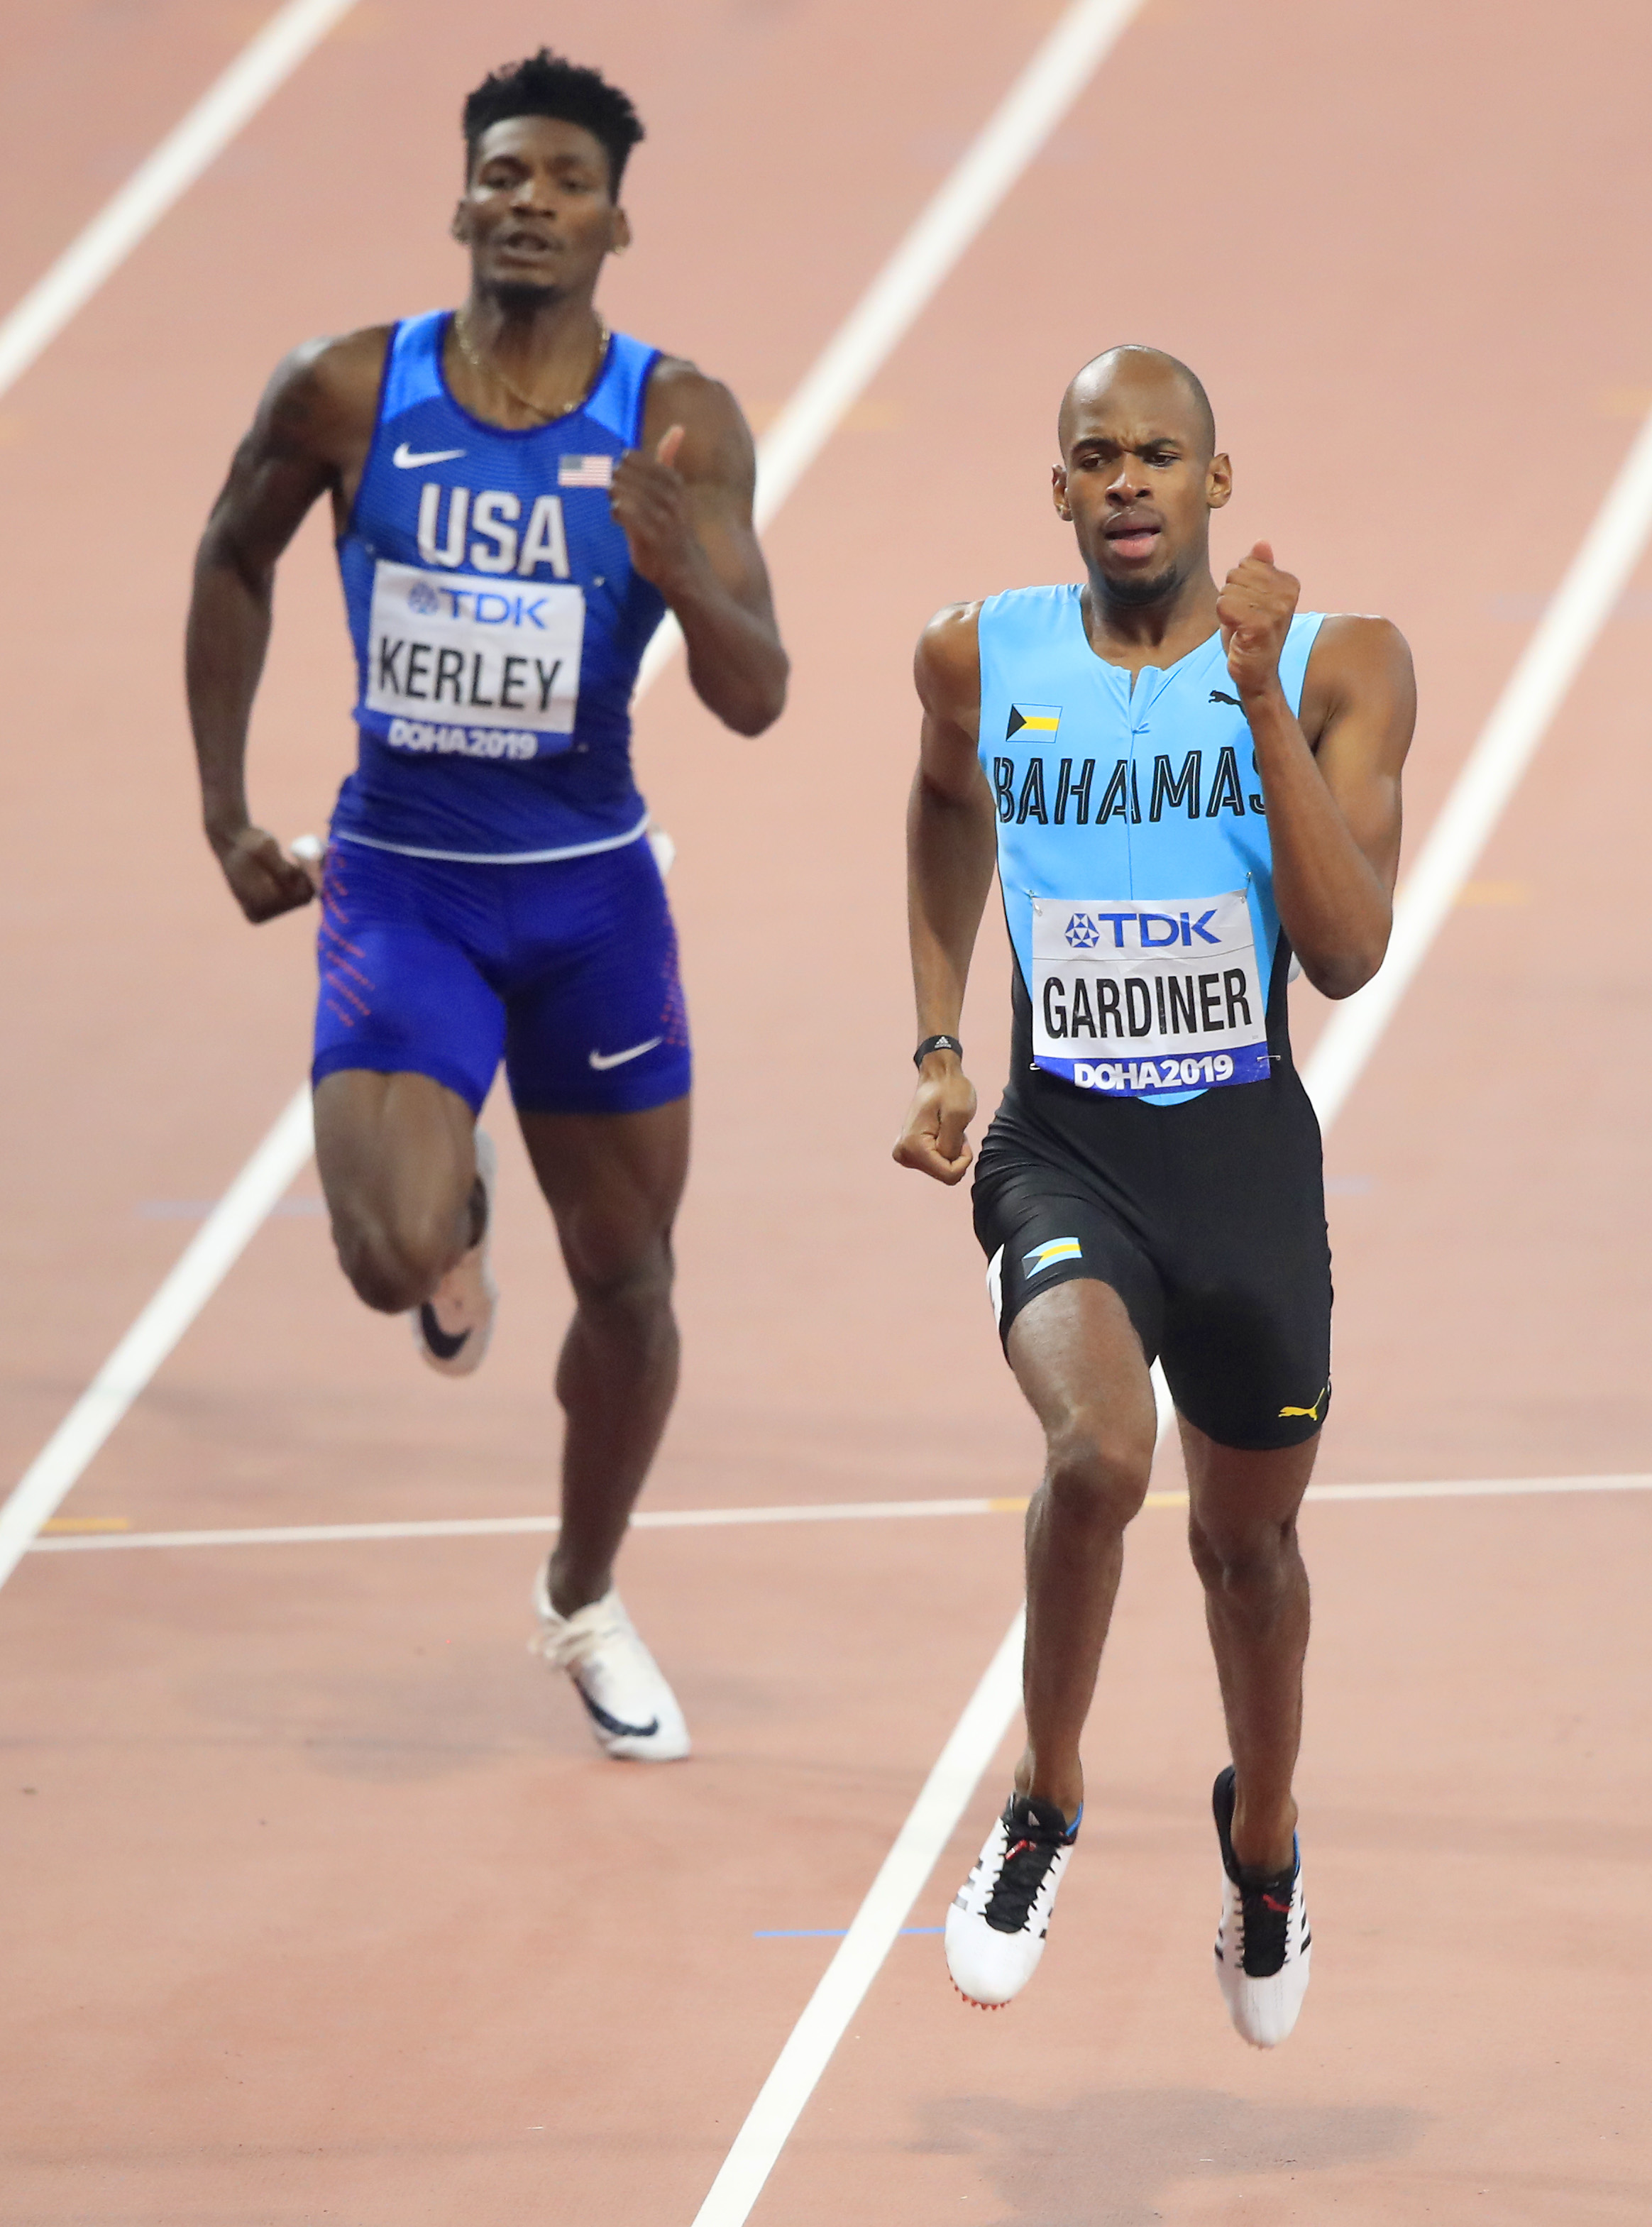 Steven Gardiner wins 400m at Doha 2019 World Athletics Championships